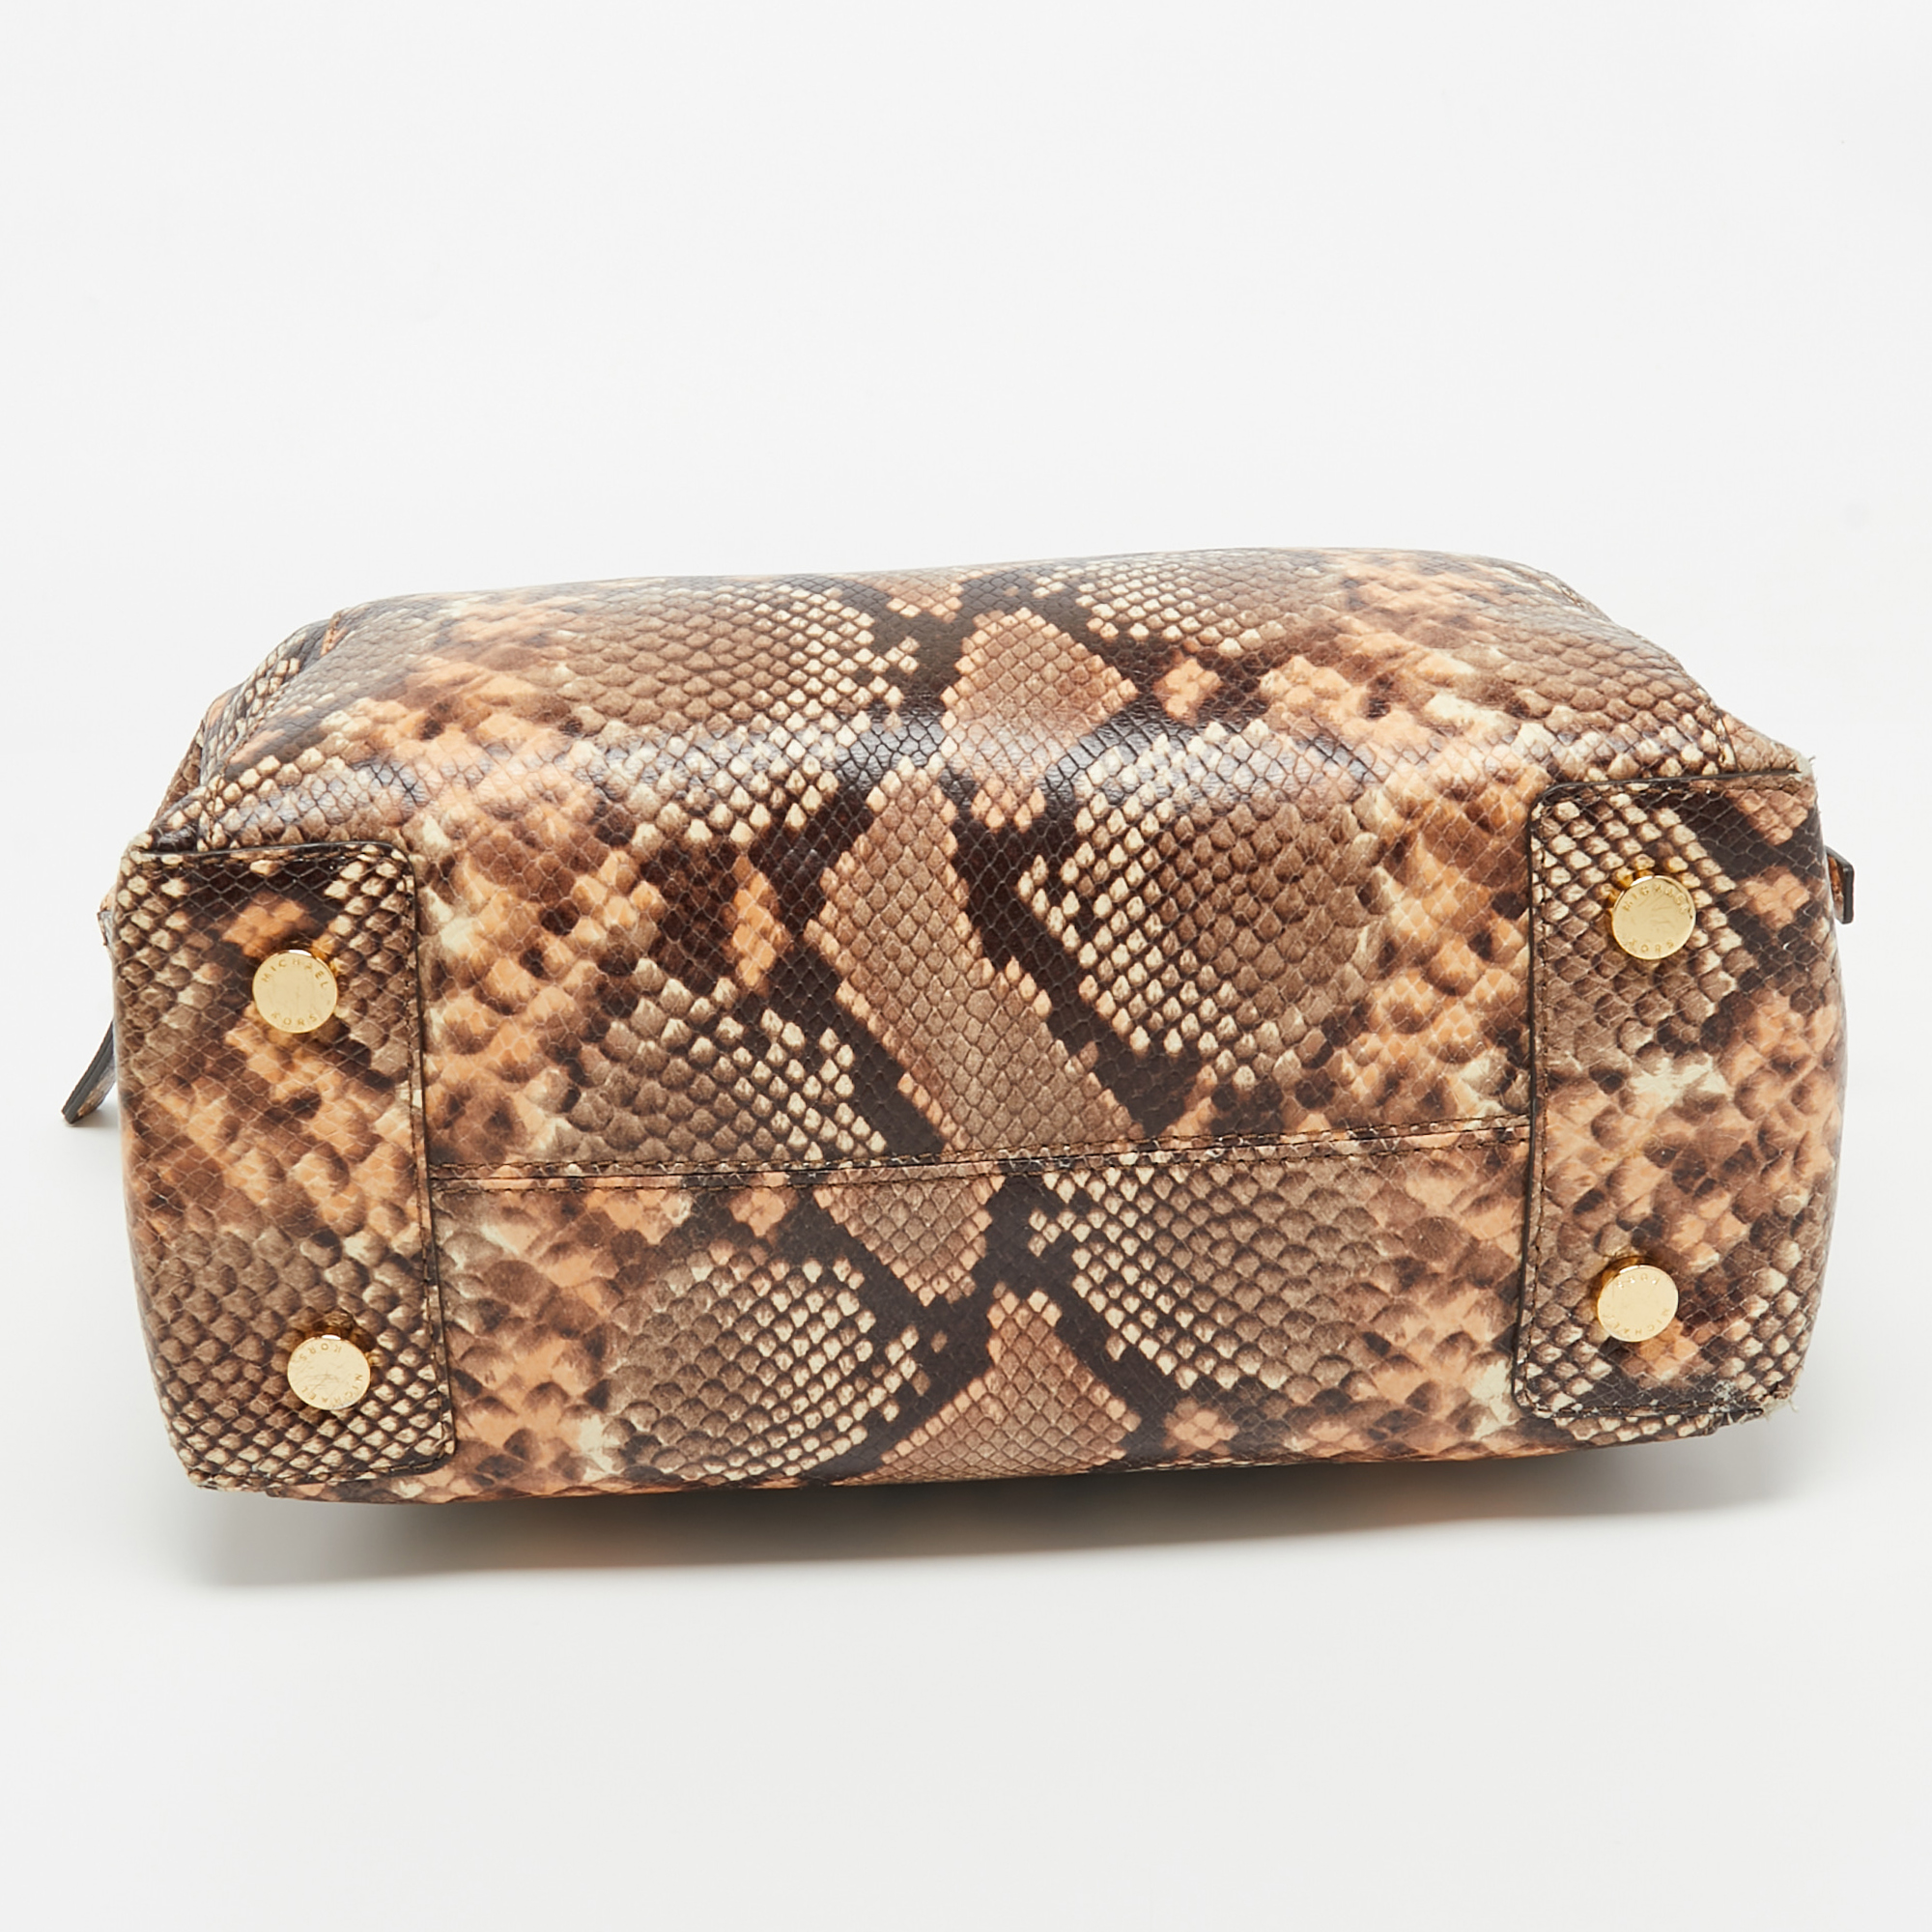 Micheal Kors Beige/Brown Python Embossed Leather Satchel